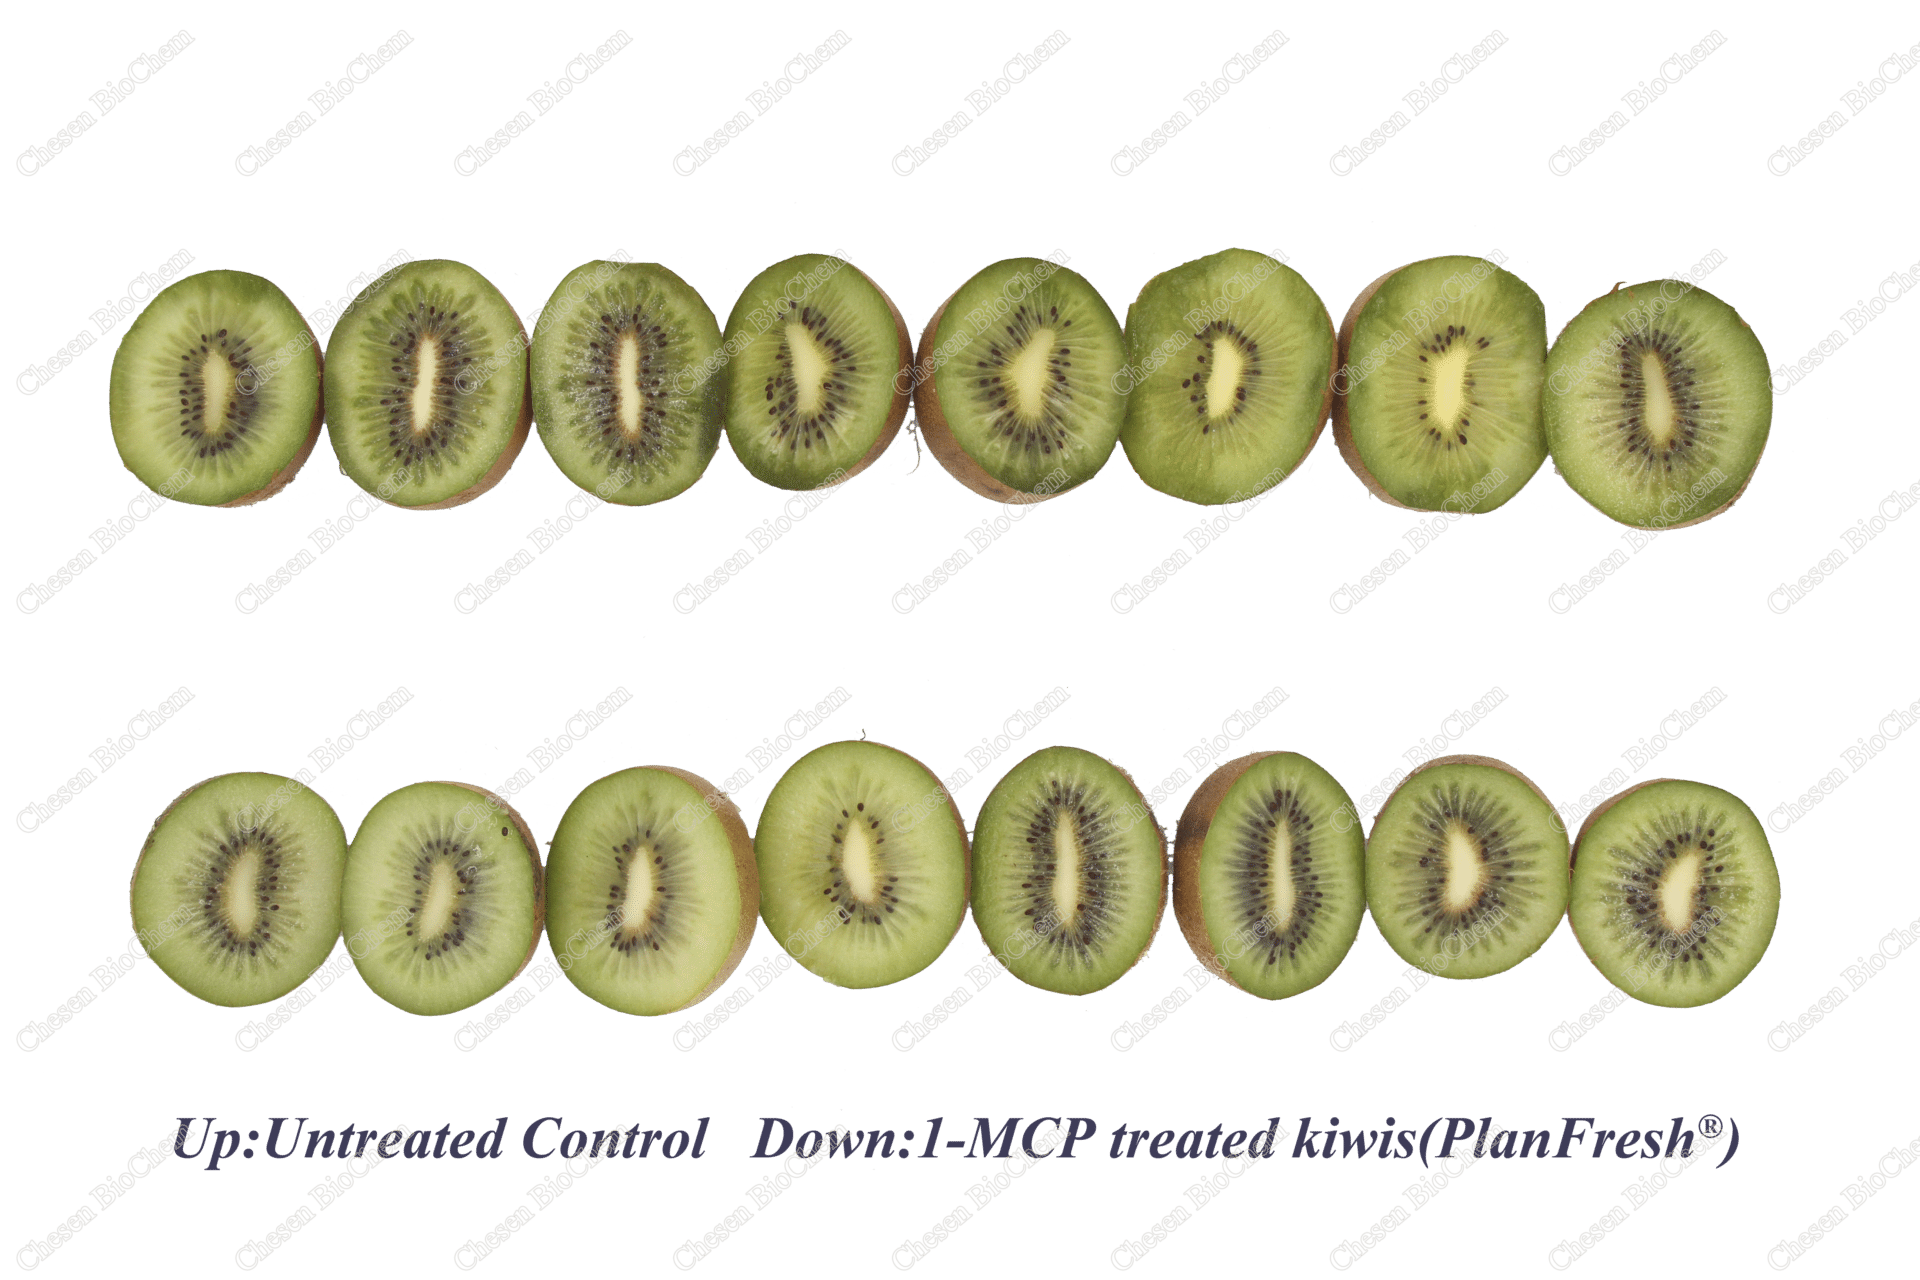 PlanFresh 1-MCP on kiwifruit